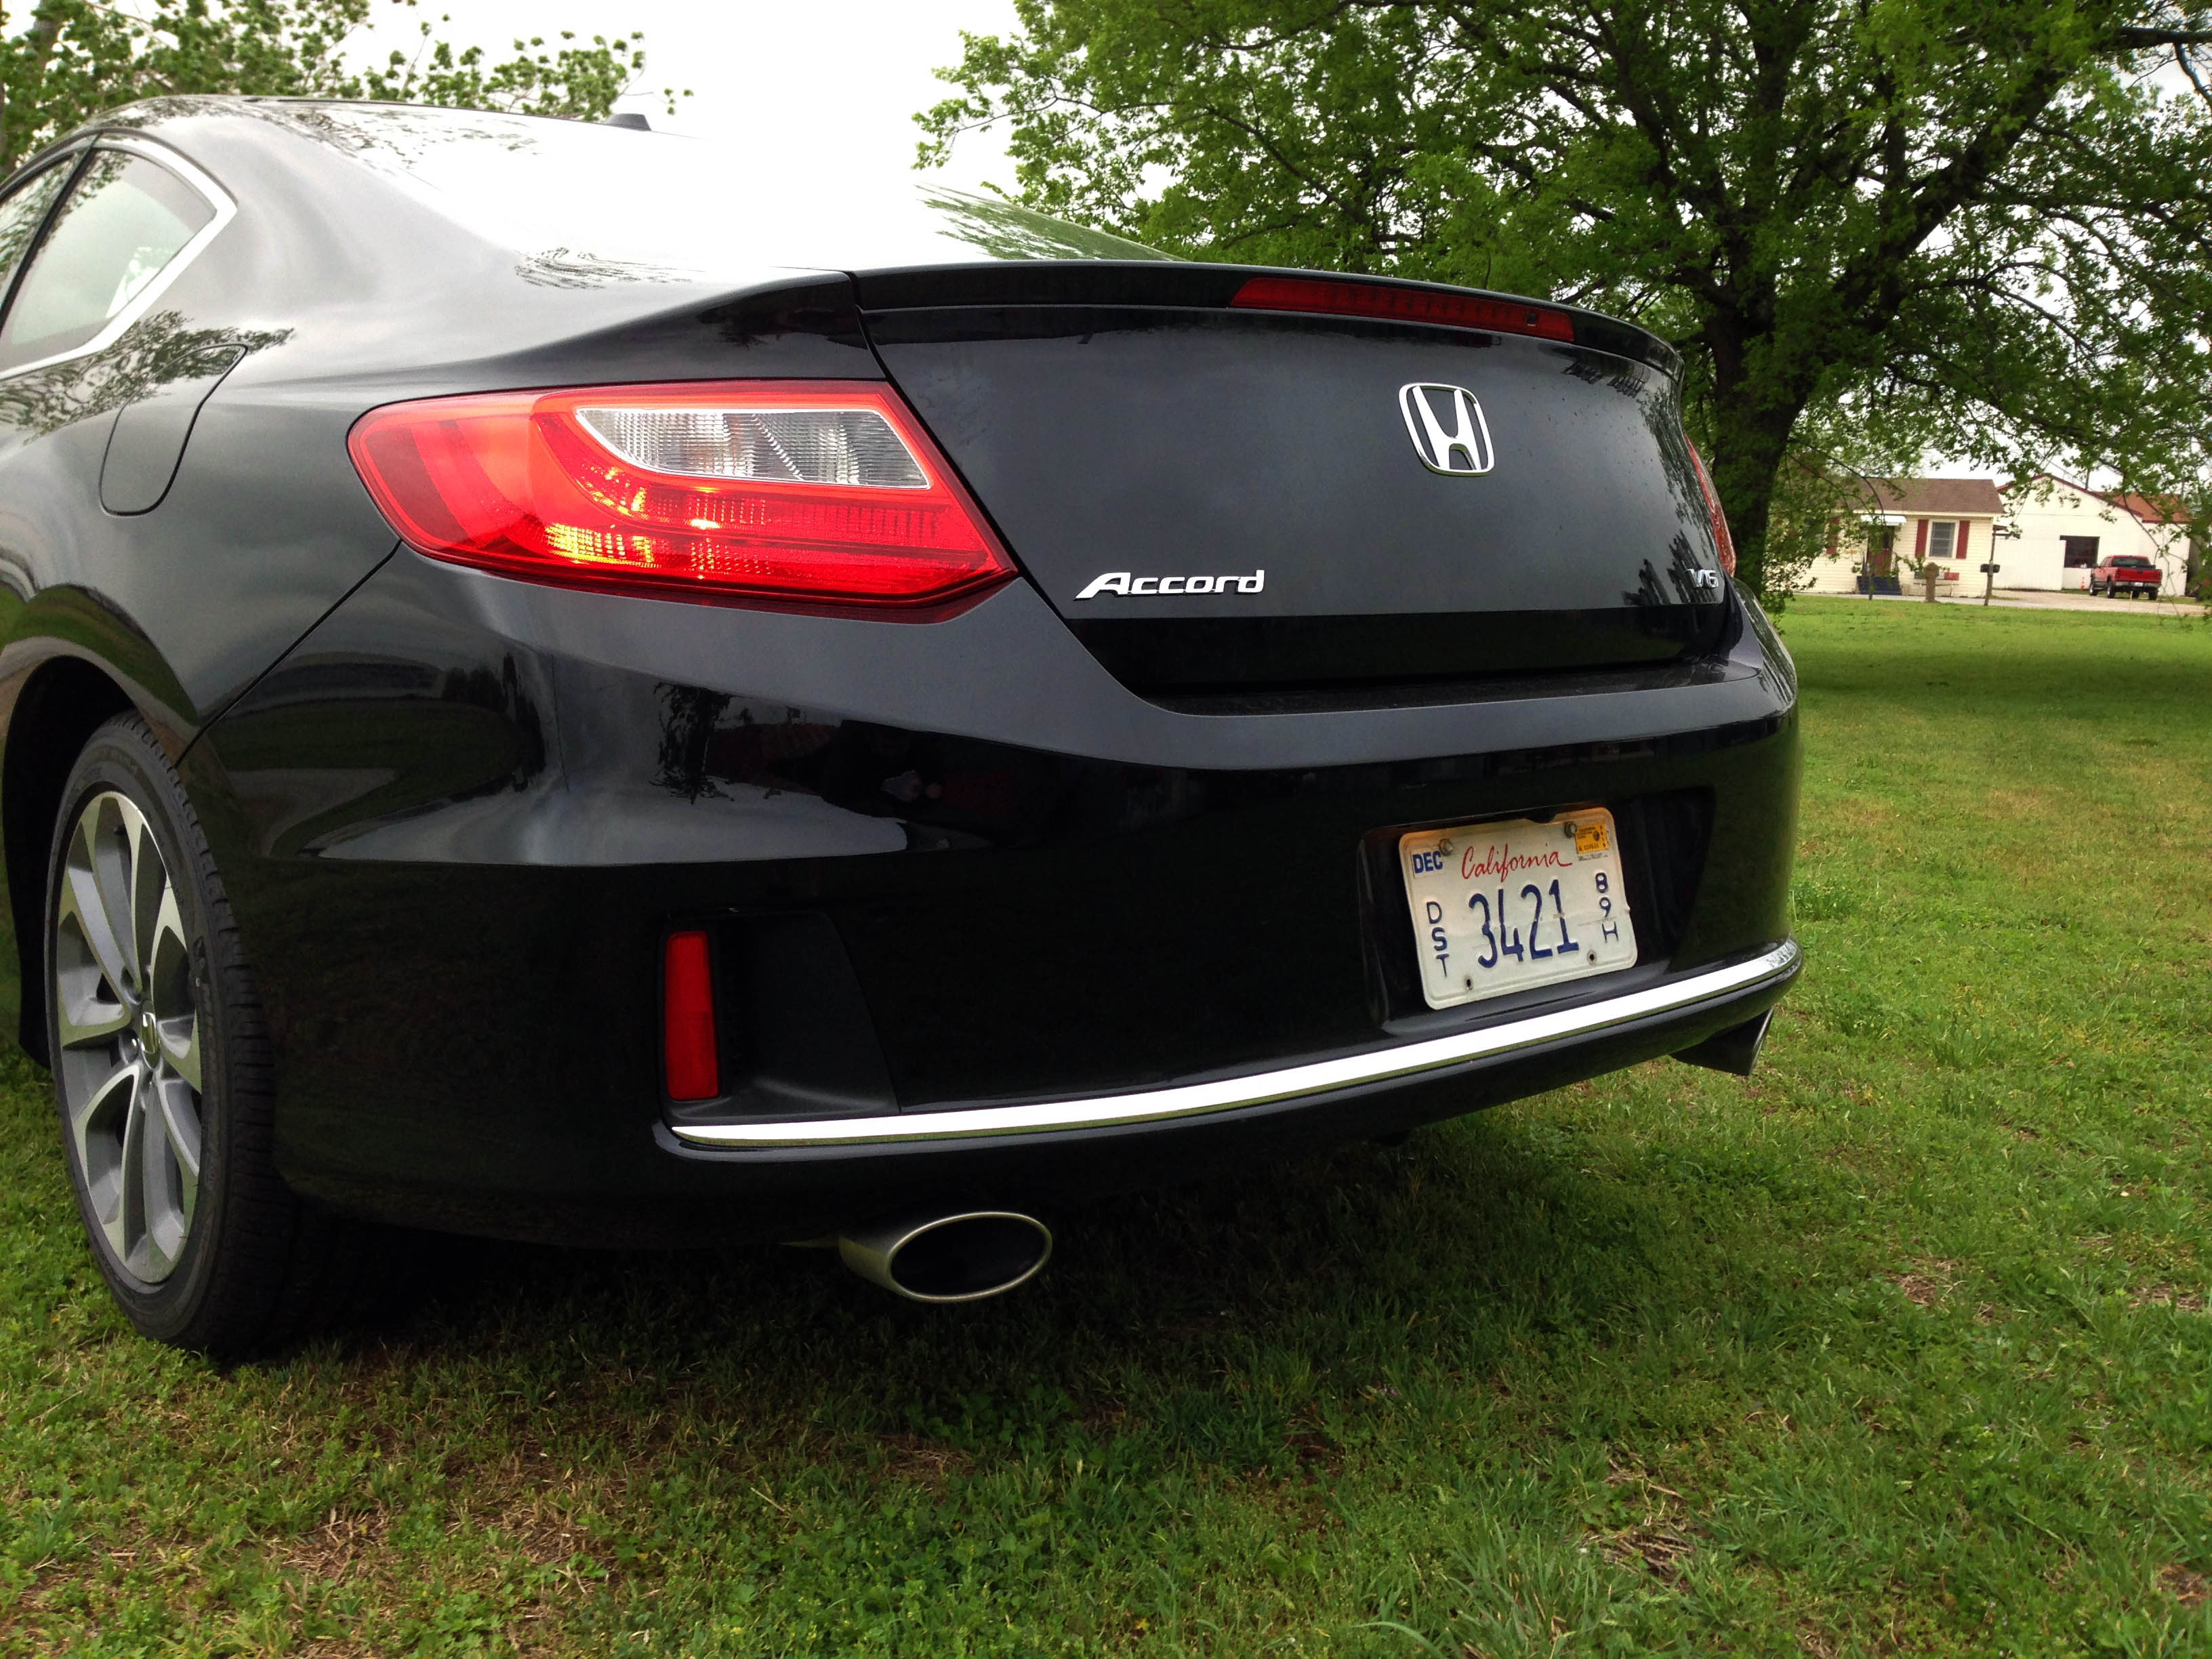 2014 Honda accord sport consumer reviews #1